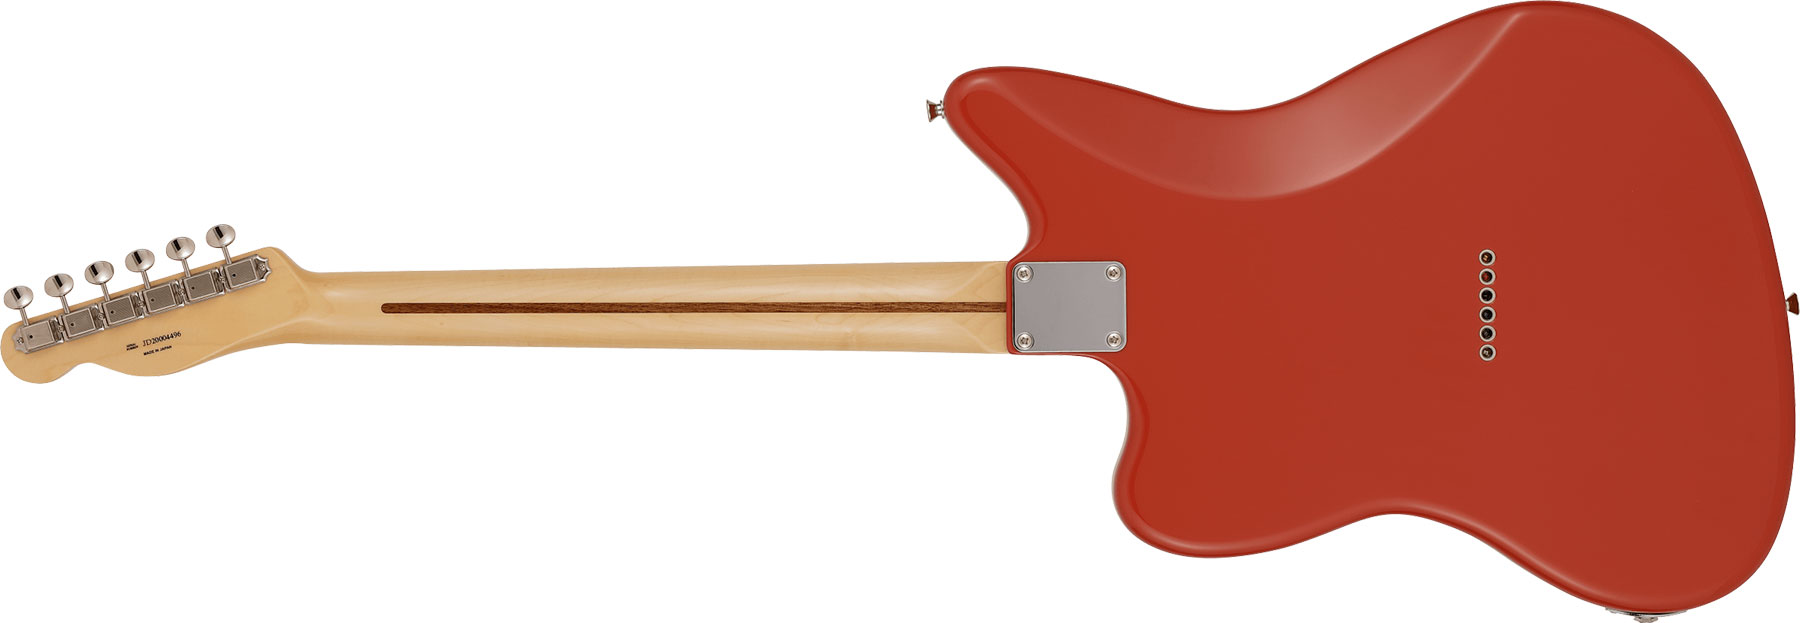 Fender Tele Offset Ltd Jap 2s Ht Mn - Fiesta Red - Retro rock electric guitar - Variation 1